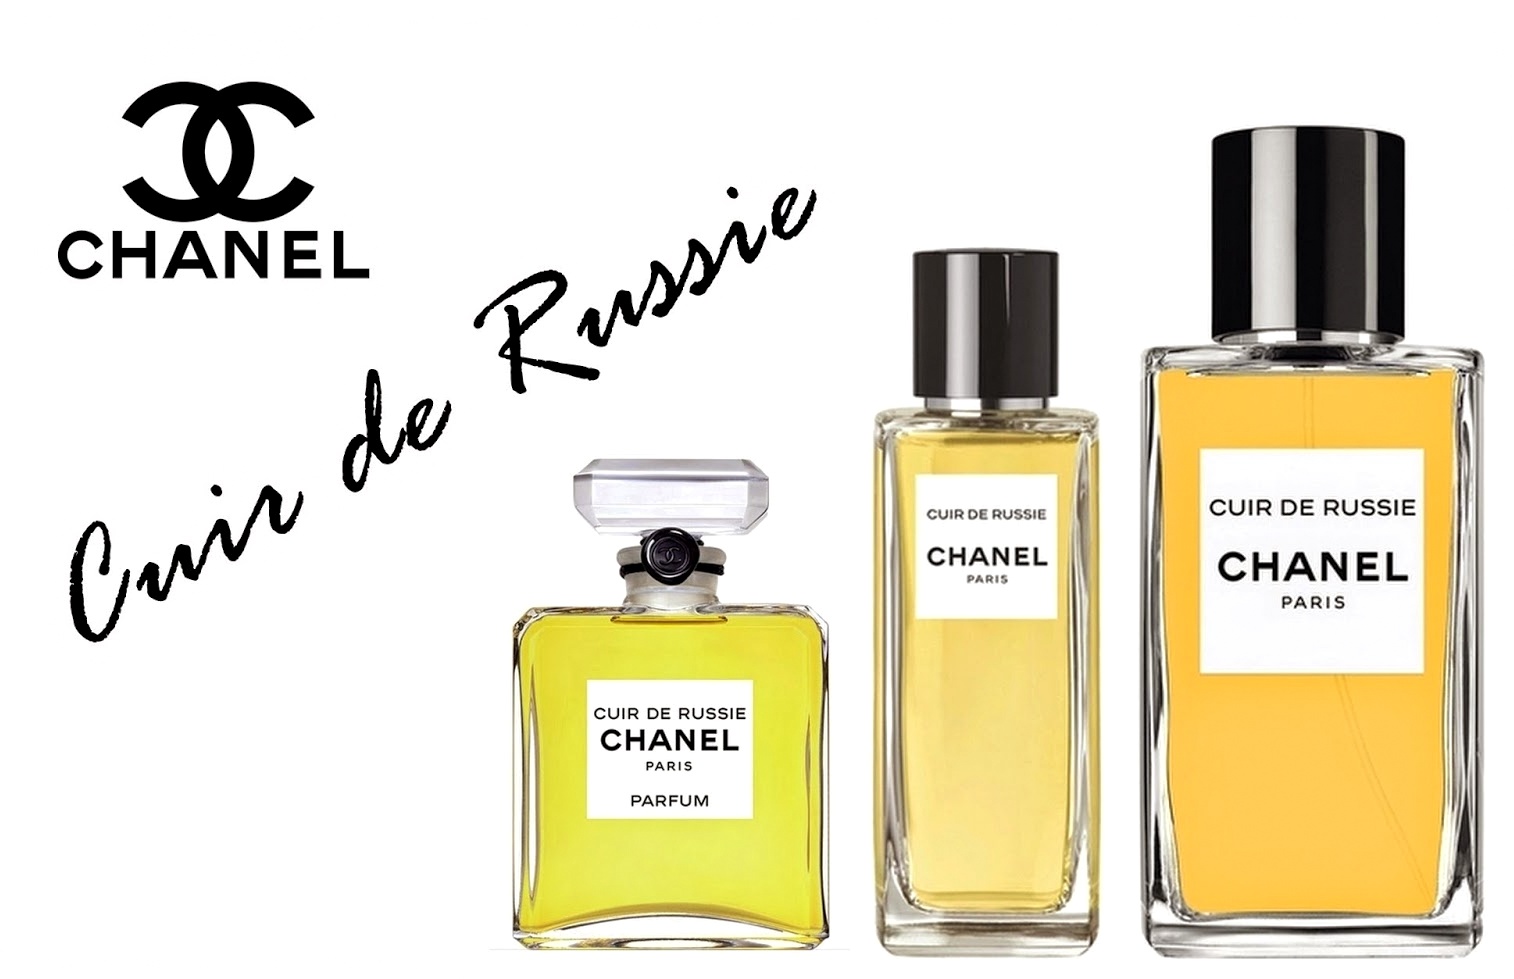 Chanel Perfume Bottles: Cuir de Russie by Chanel c1924